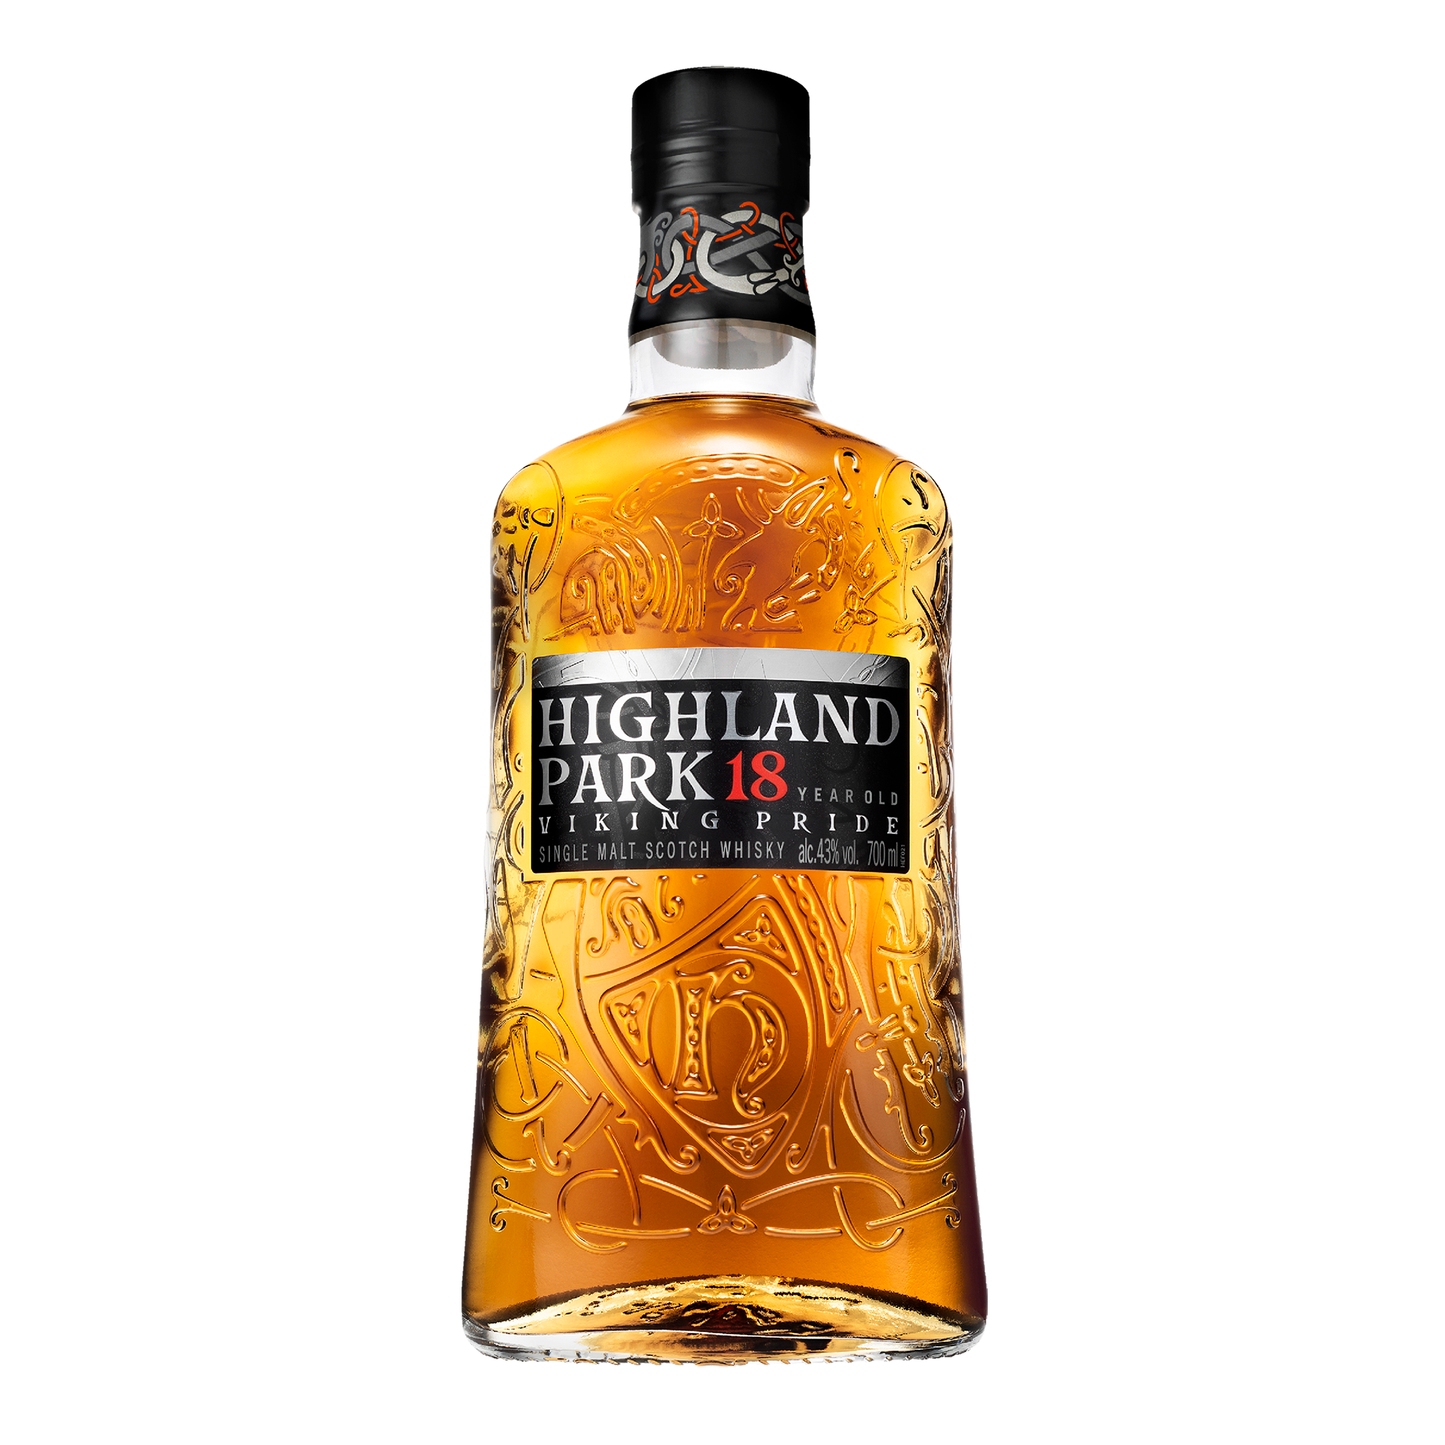 Highland Park 18 Year Old Viking Pride Single Malt Scotch Whisky 700ml (2020 Release) - CBD Cellars